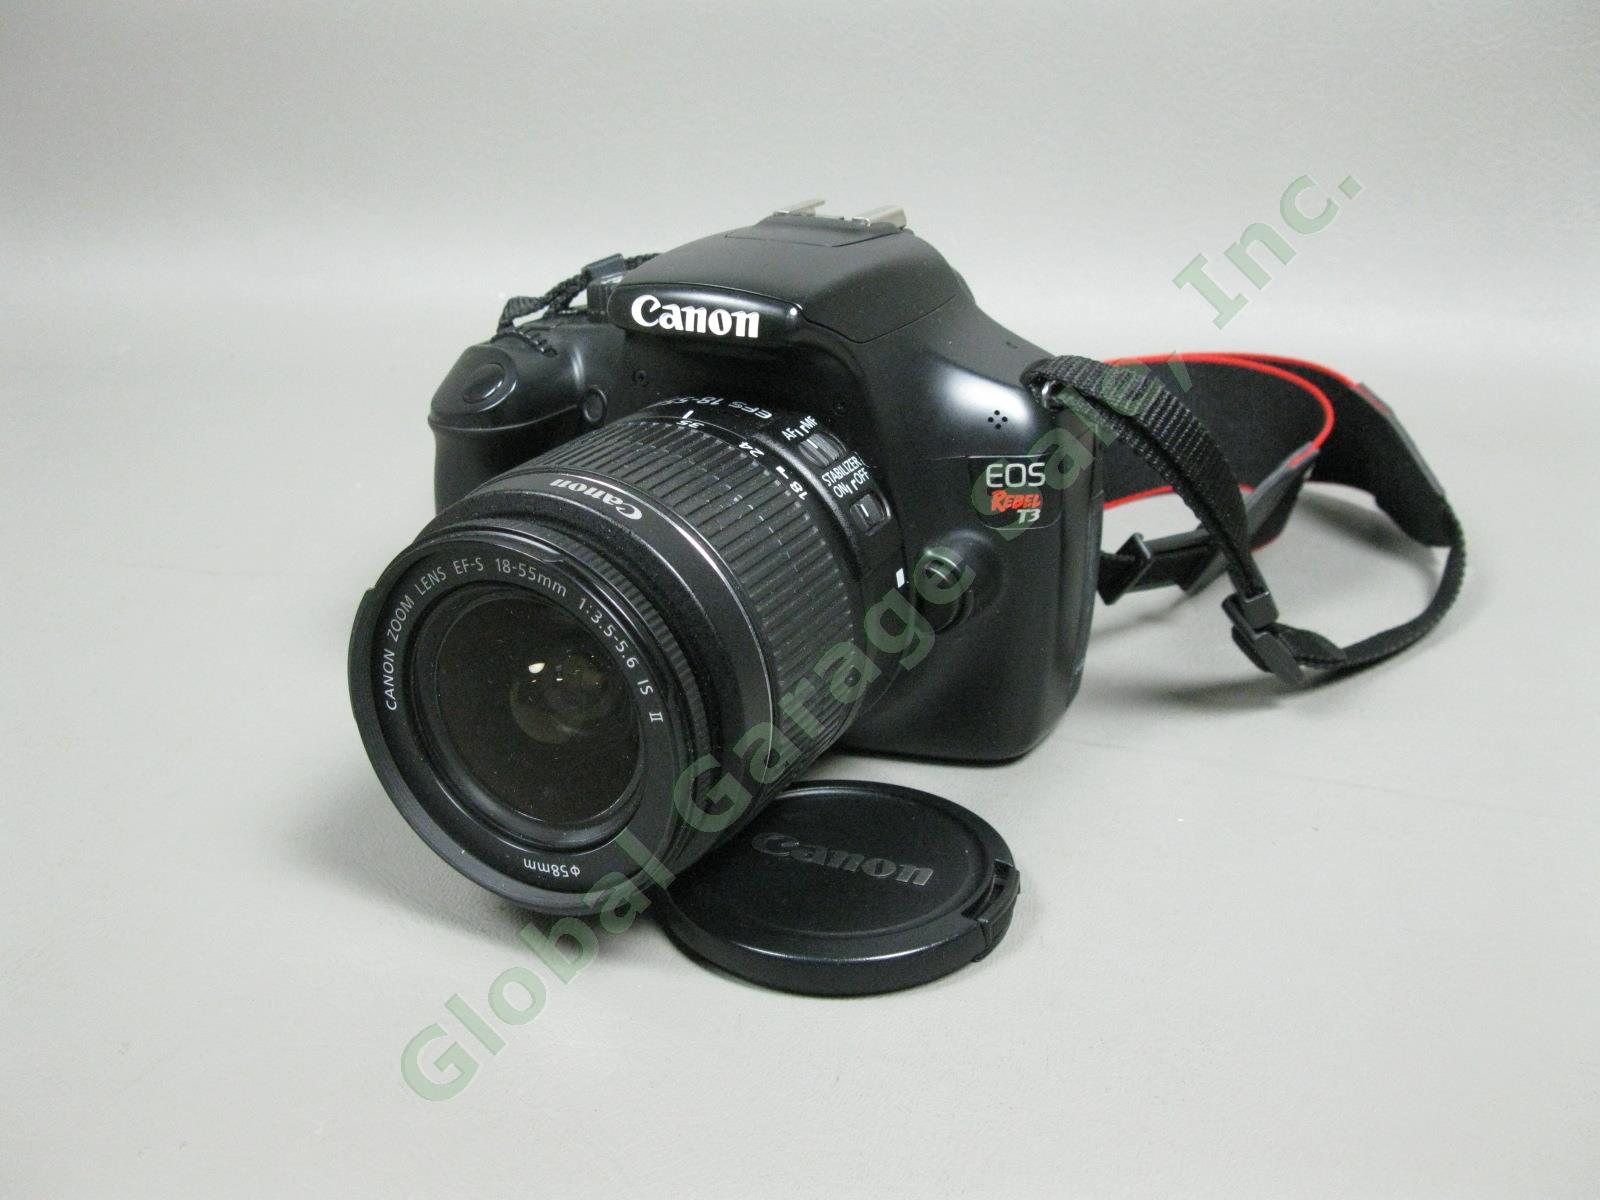 Canon EOS Rebel T3 SLR Camera Lot 80/200mm Lens Portable Tripod Eddie Bauer Bag 1